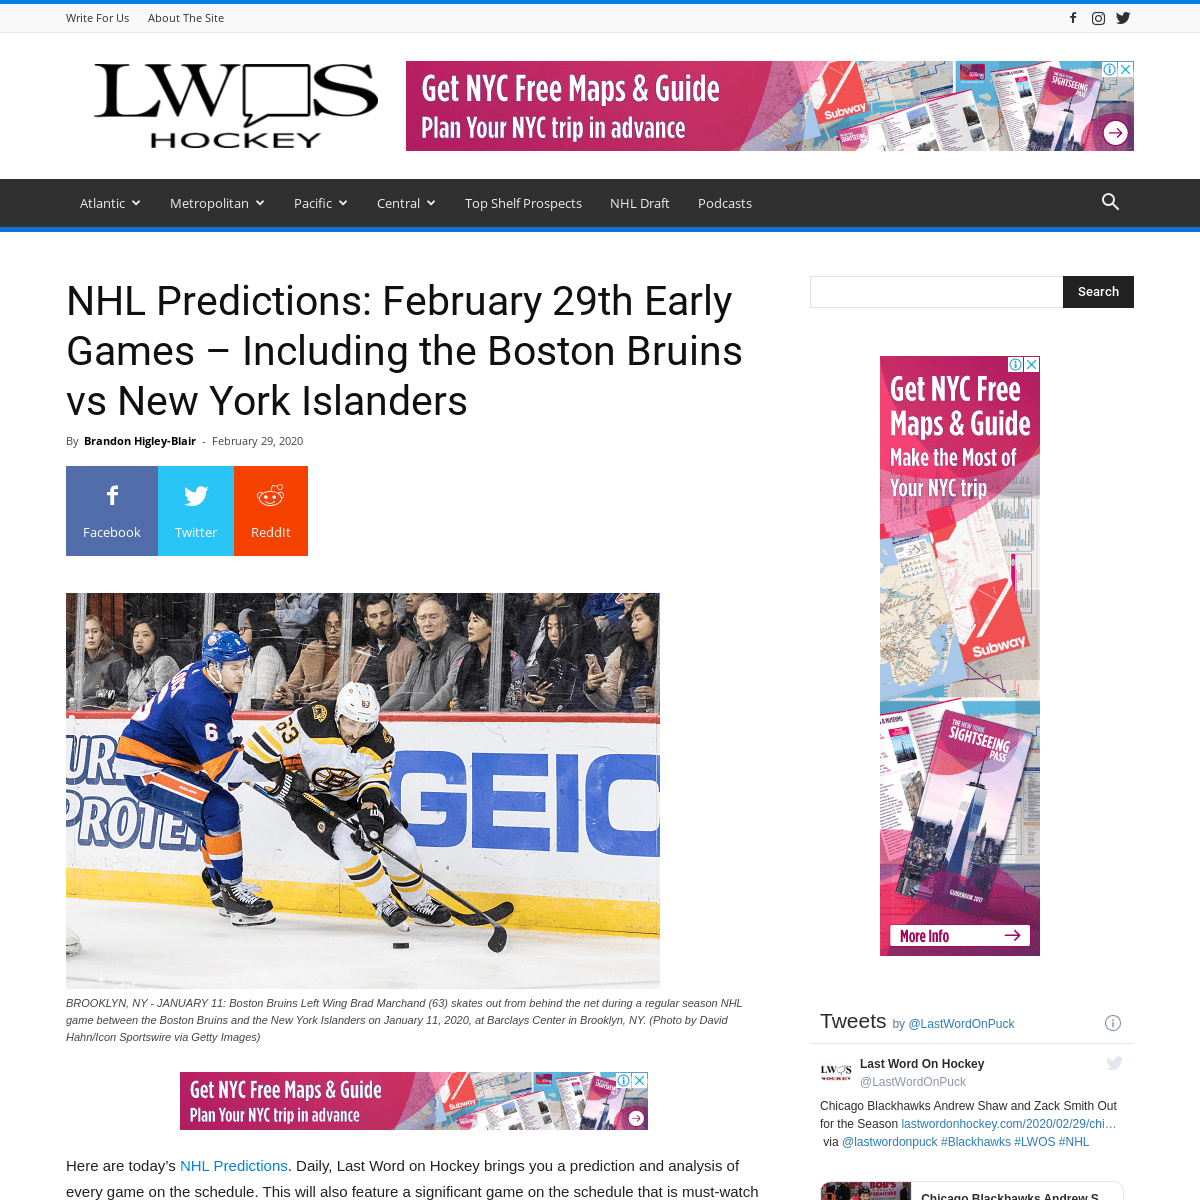 A complete backup of lastwordonhockey.com/2020/02/29/nhl-predictions-february-29-bruins-islanders/